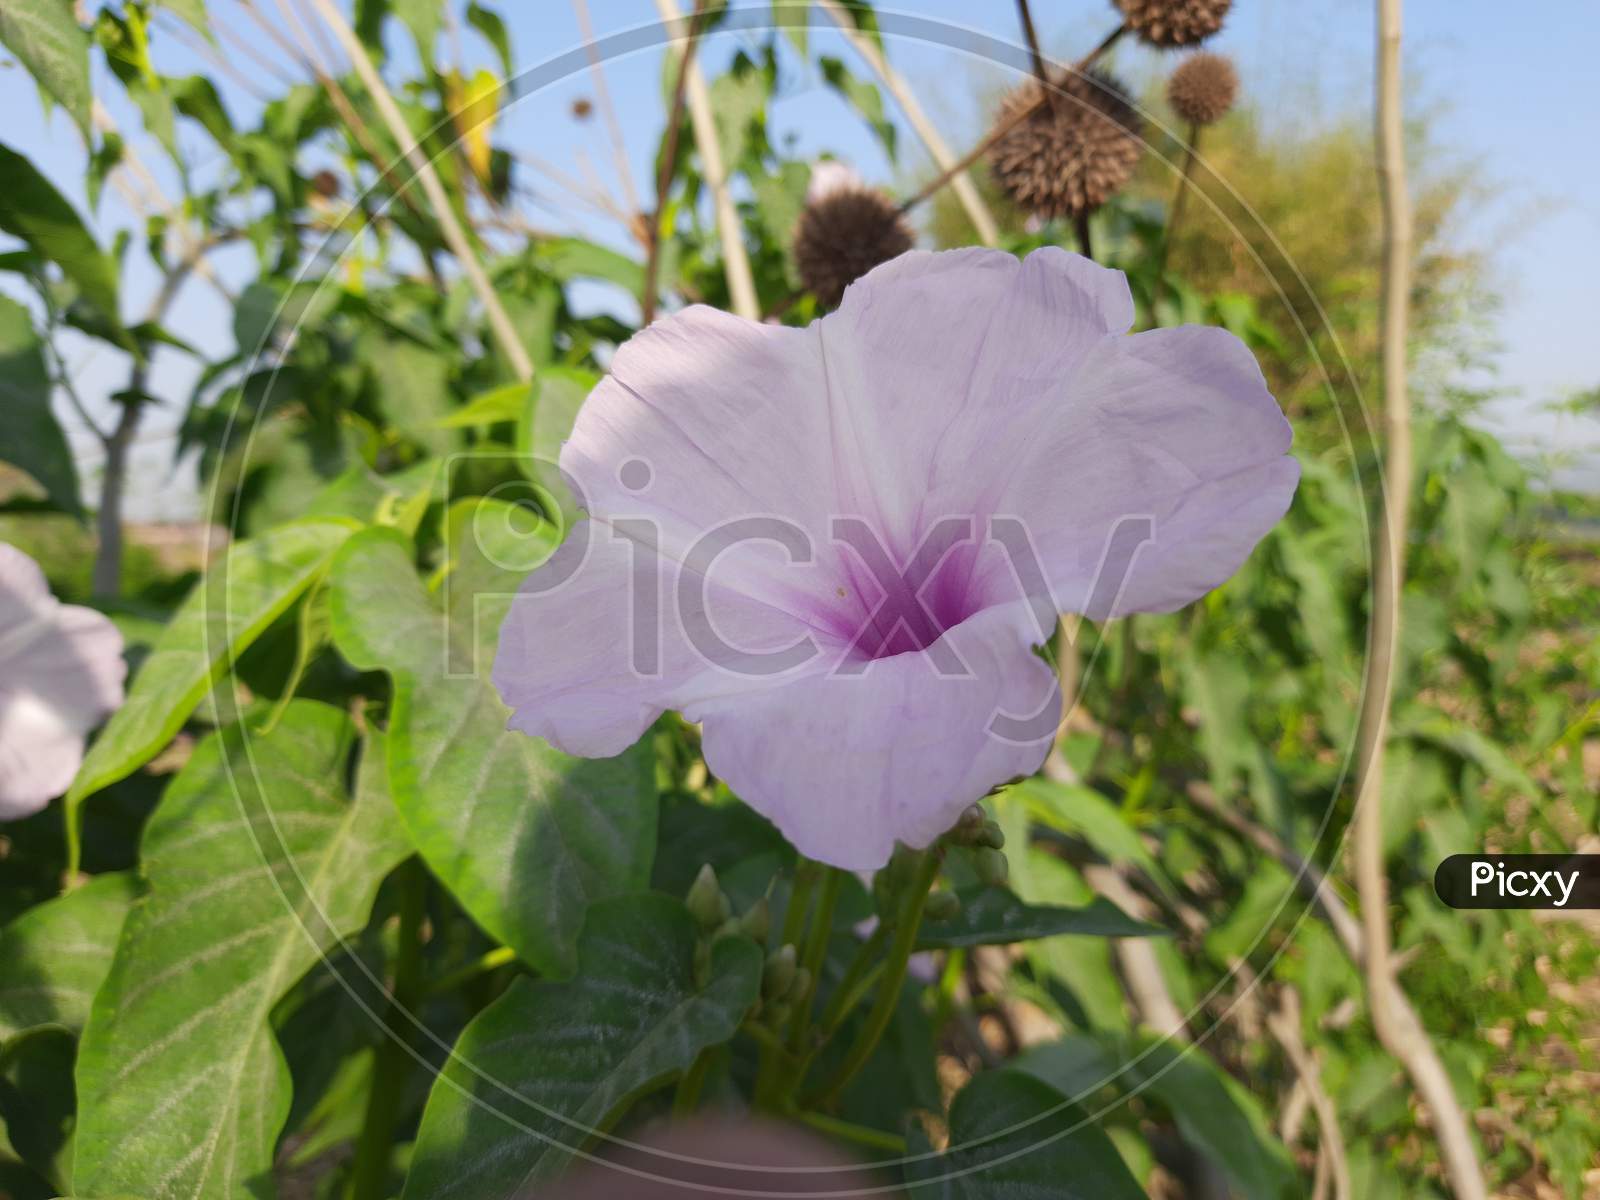 Ipomoea carnea( morning glory) flower.